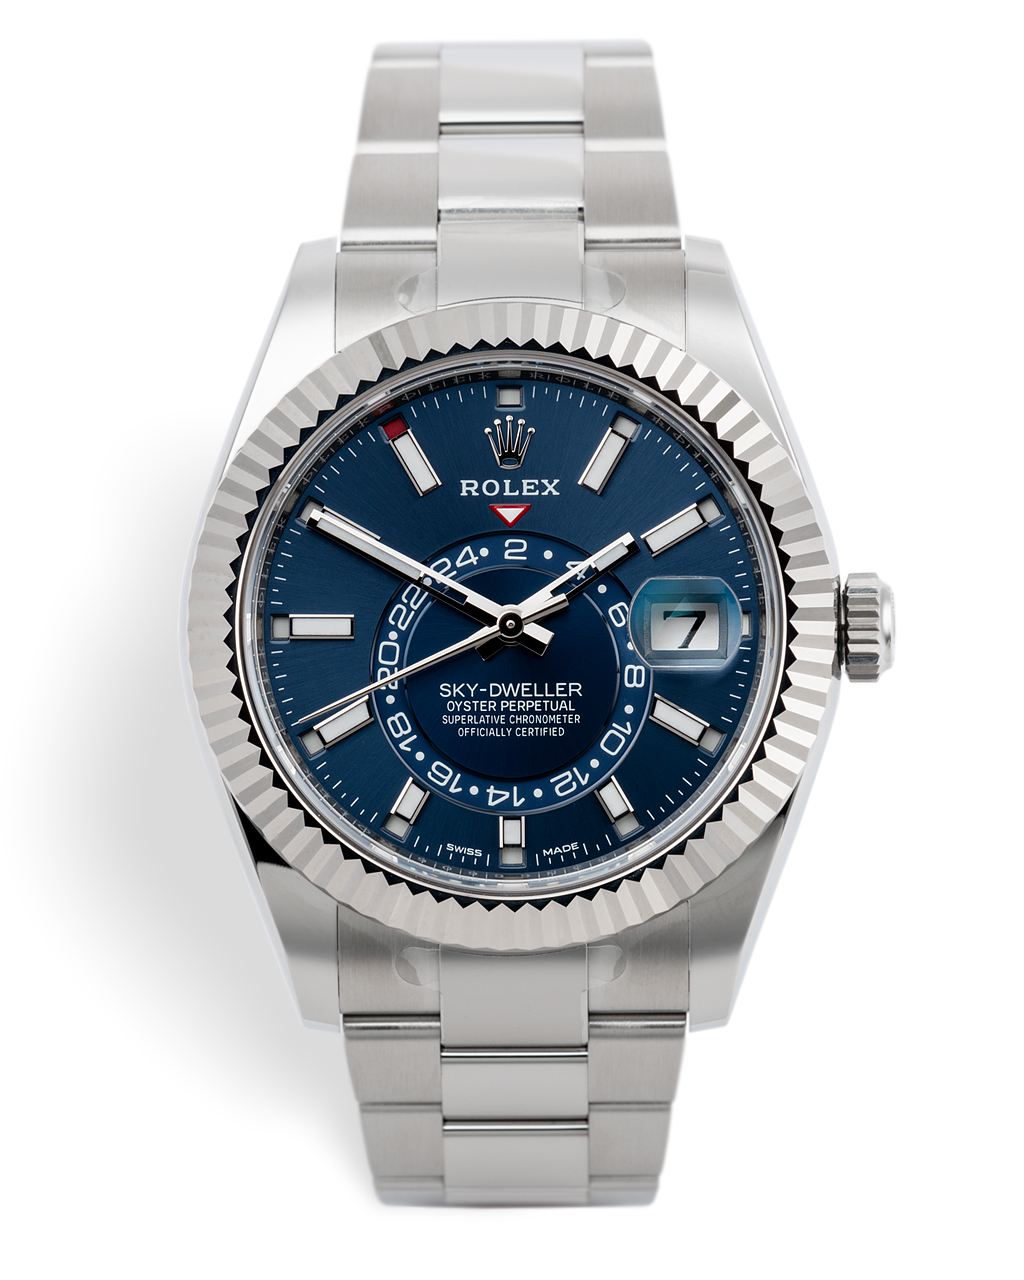 Rolex Sky-Dweller Watches | ref 326934 | Annual Calendar | The Watch Club